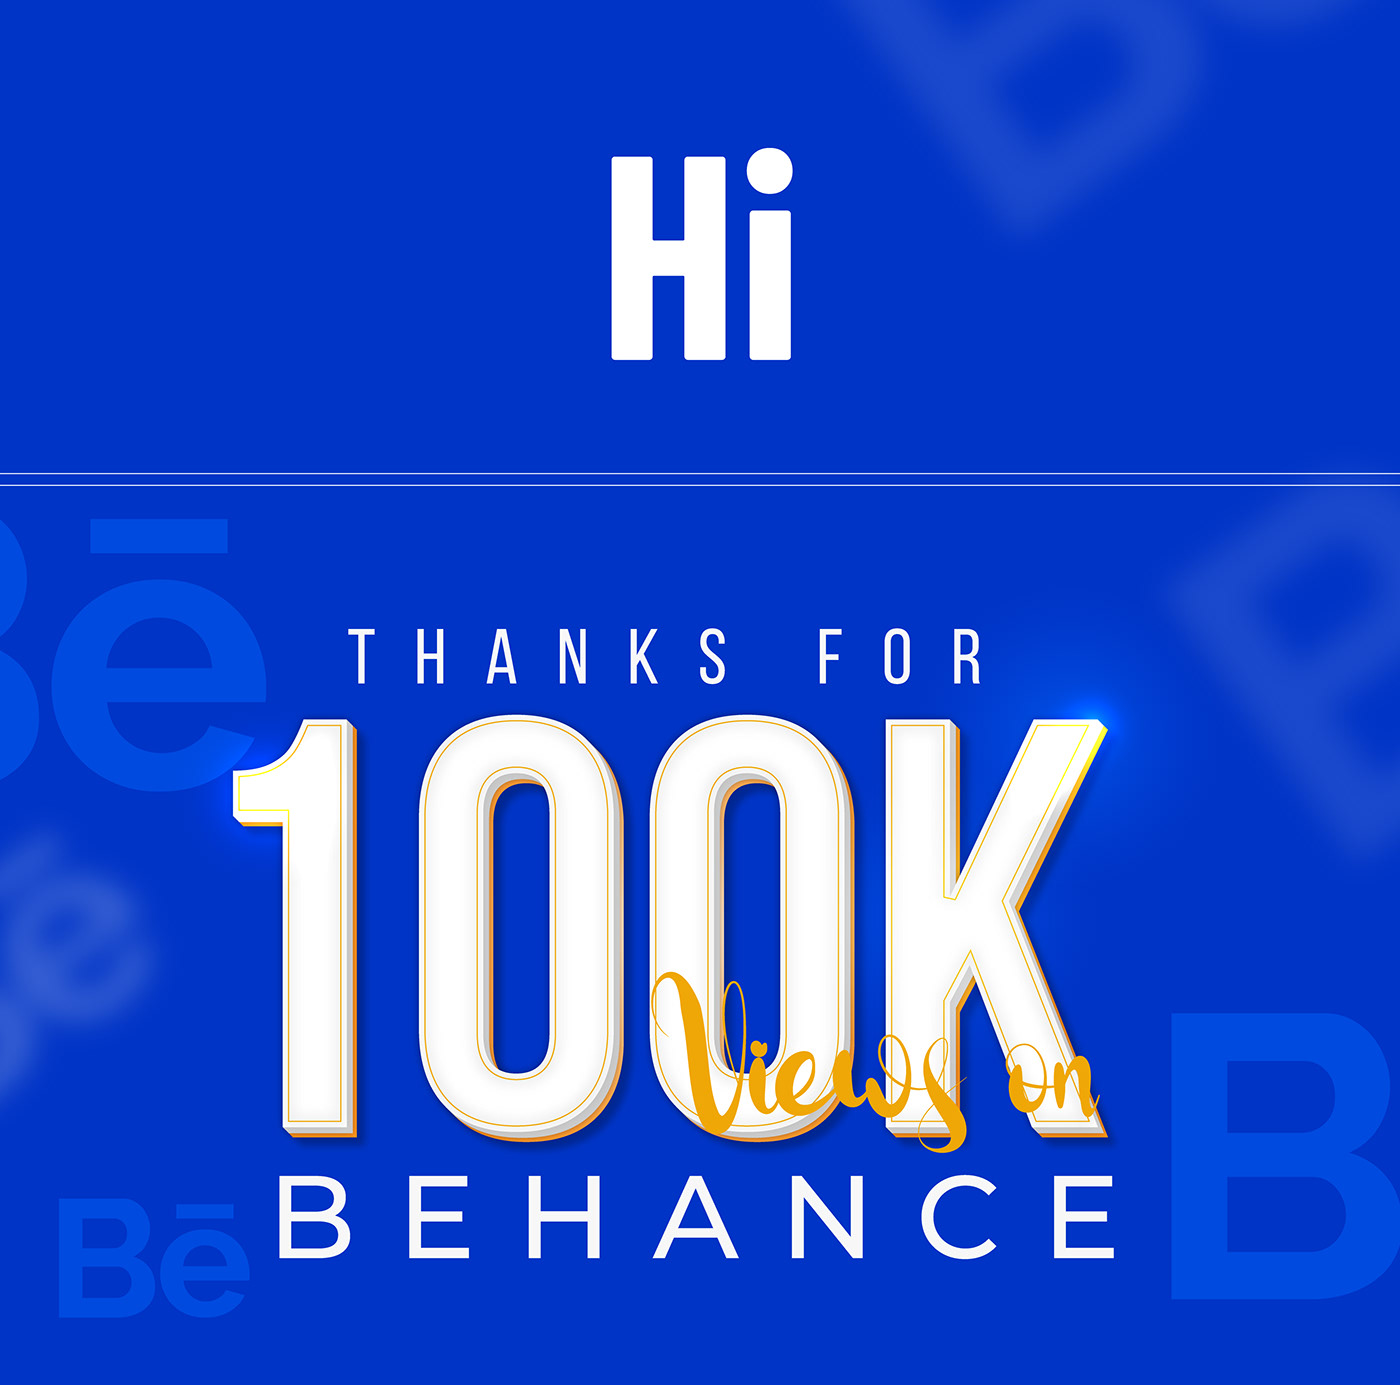 100k Views on Behance - DesignHatt